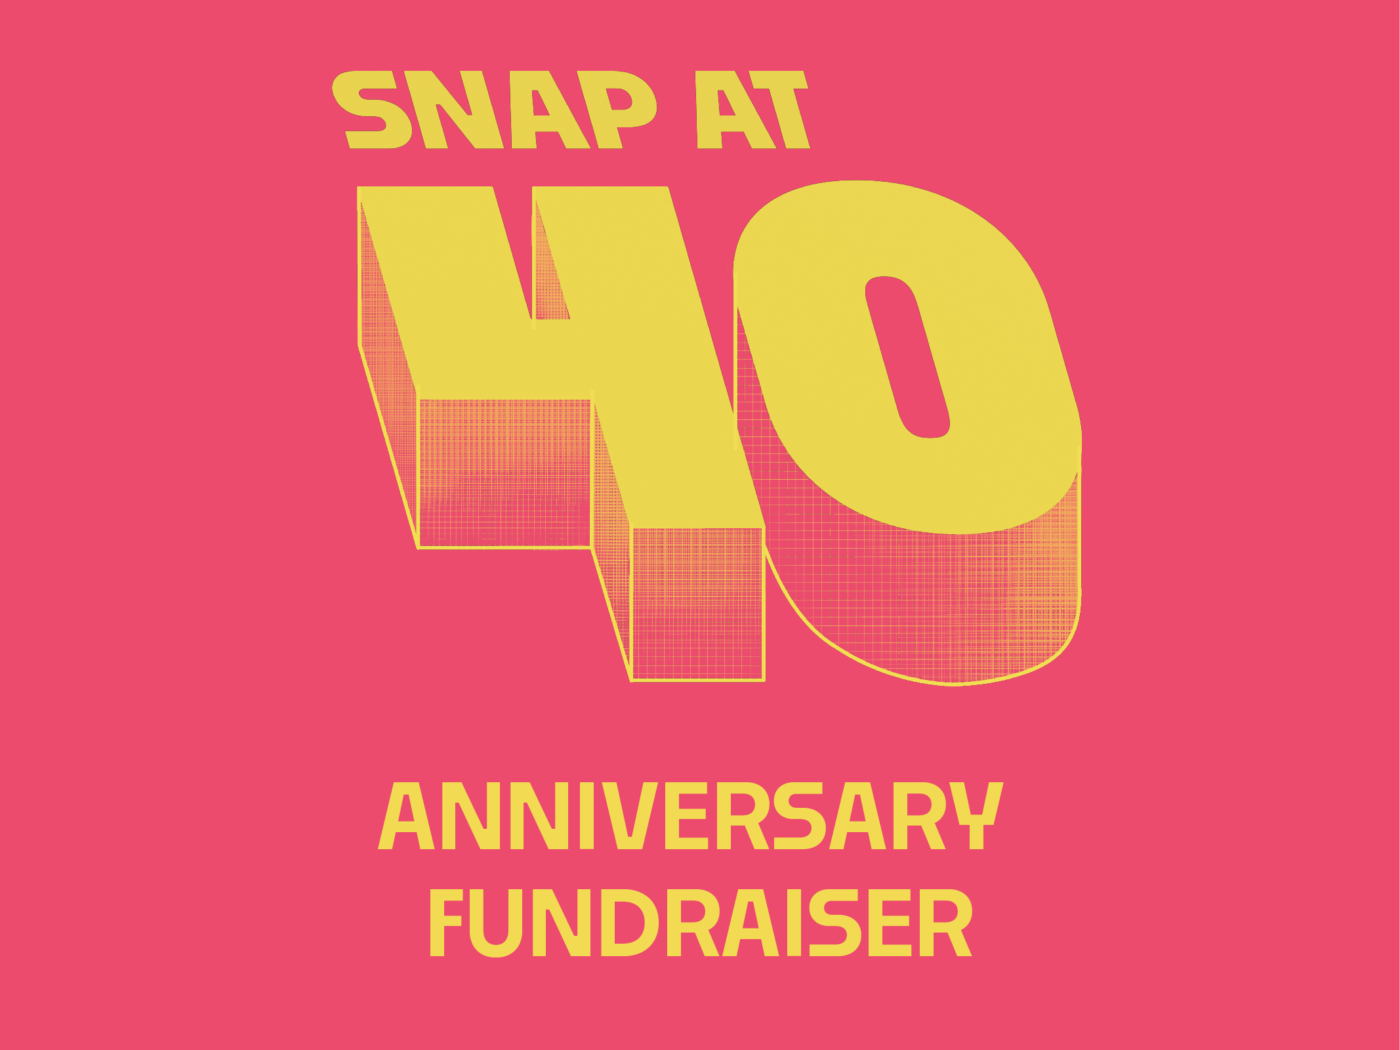 Anniversary Fundraiser Logo Featured Image, reads "SNAP at 40: Anniversary Fundraiser"